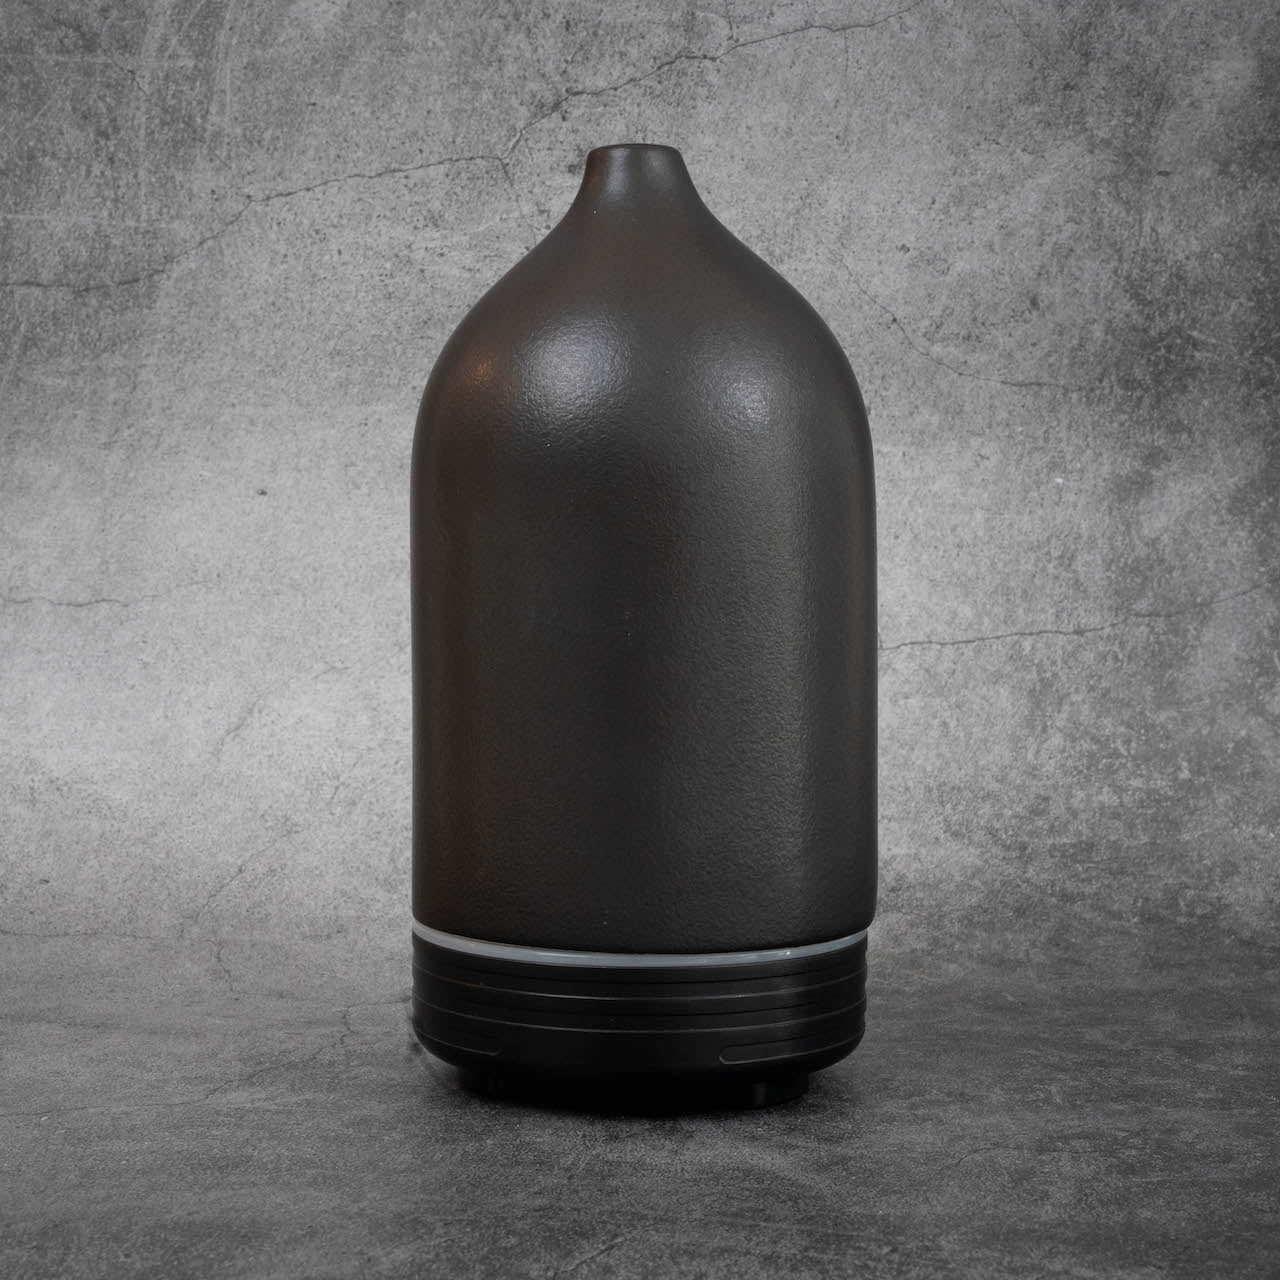 A cone-shaped black essential oil diffuser. 